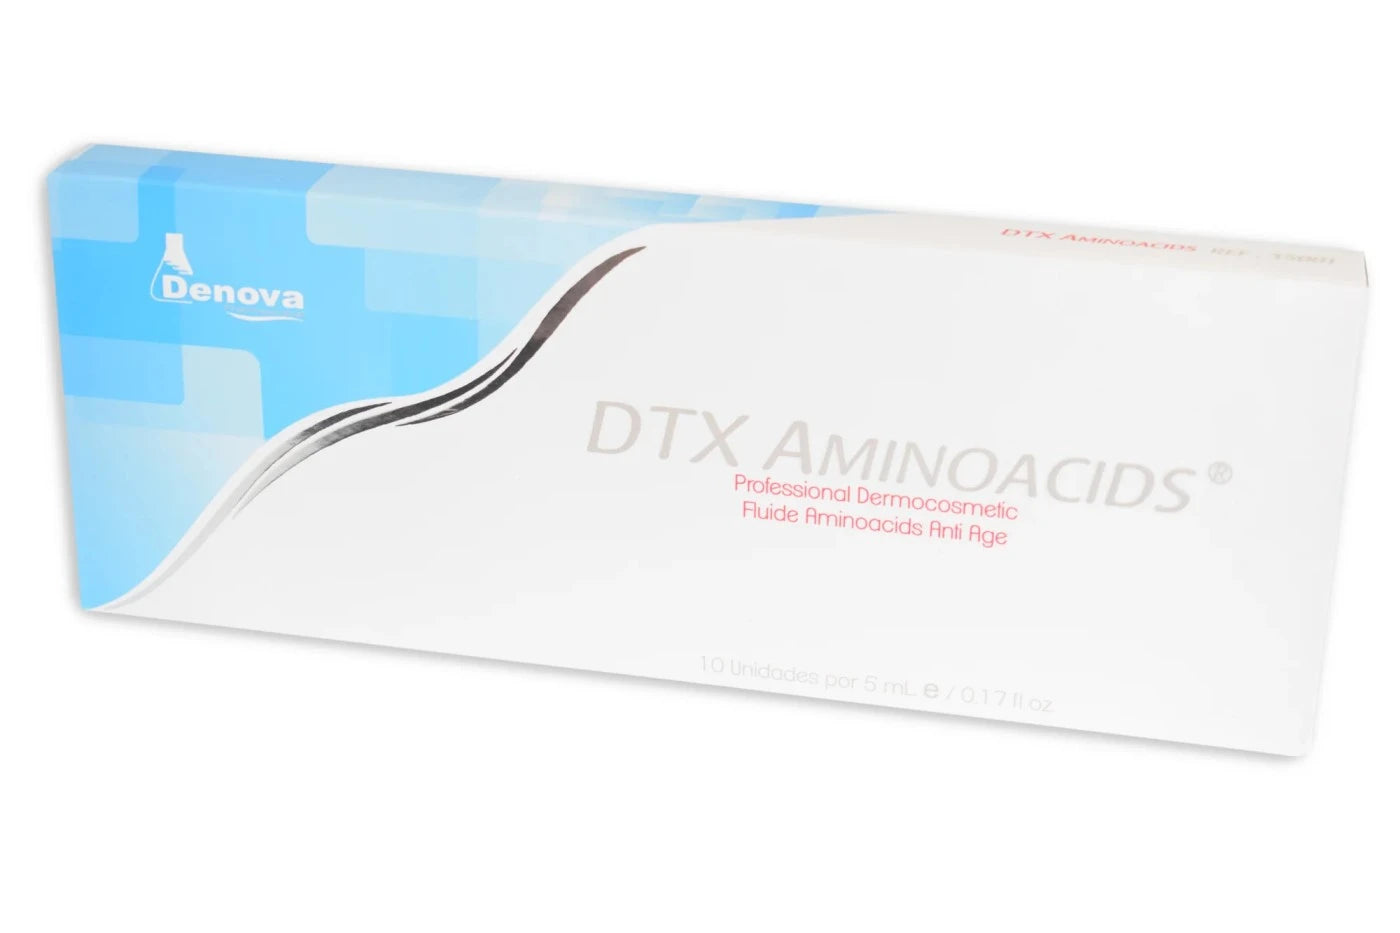 DTX Aminoacids By Denova - Complejo de Antioxidantes Dexintoxicante -10Amp x 5ml